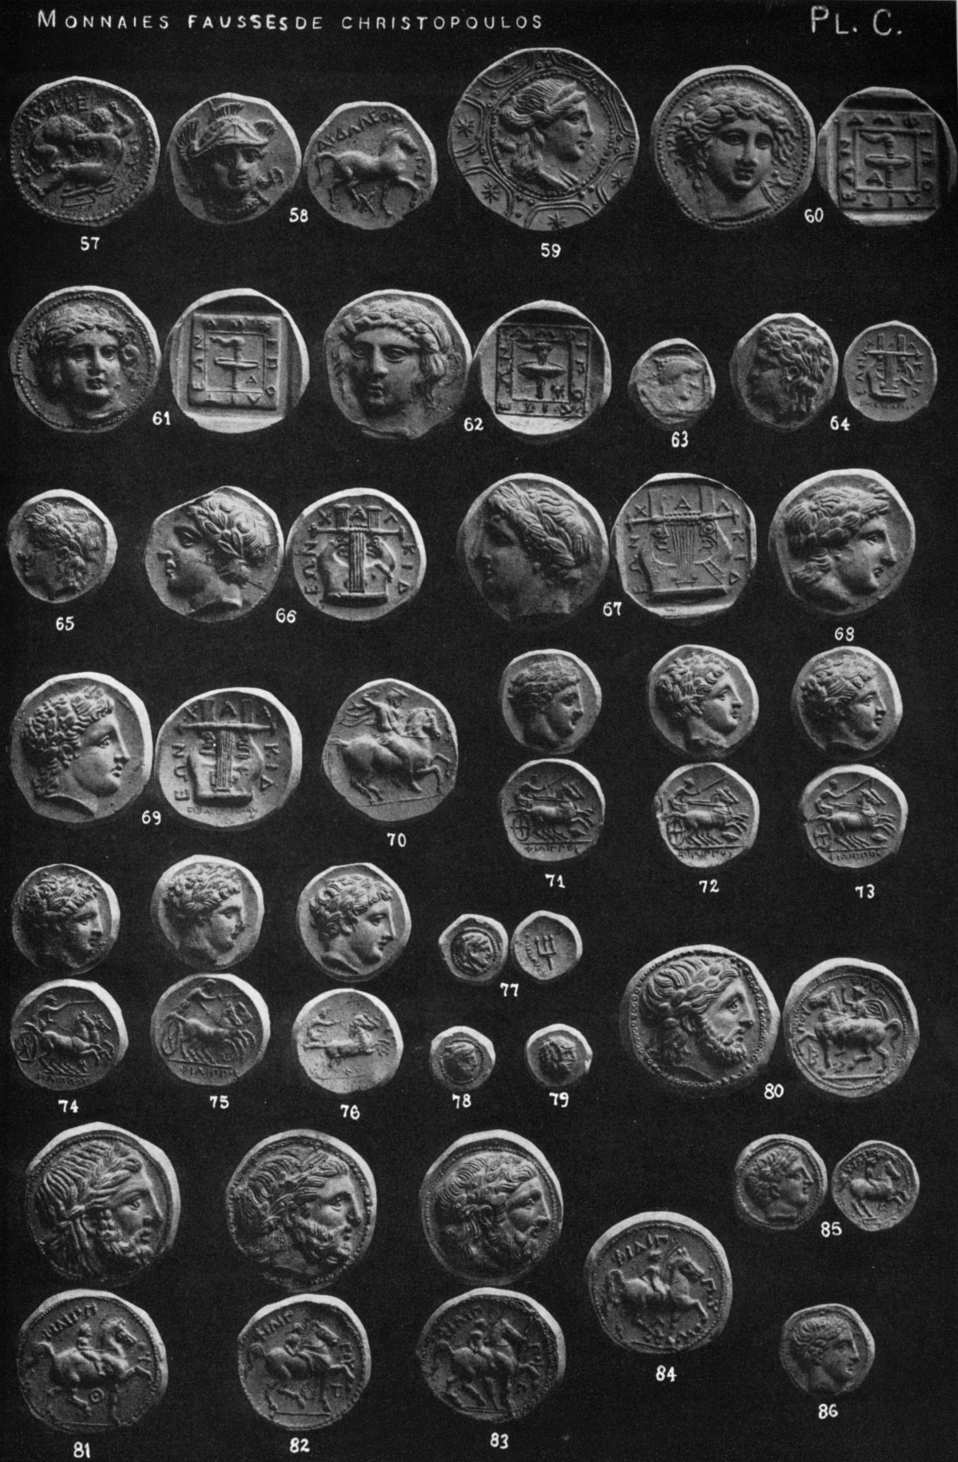 Plate C of false coins